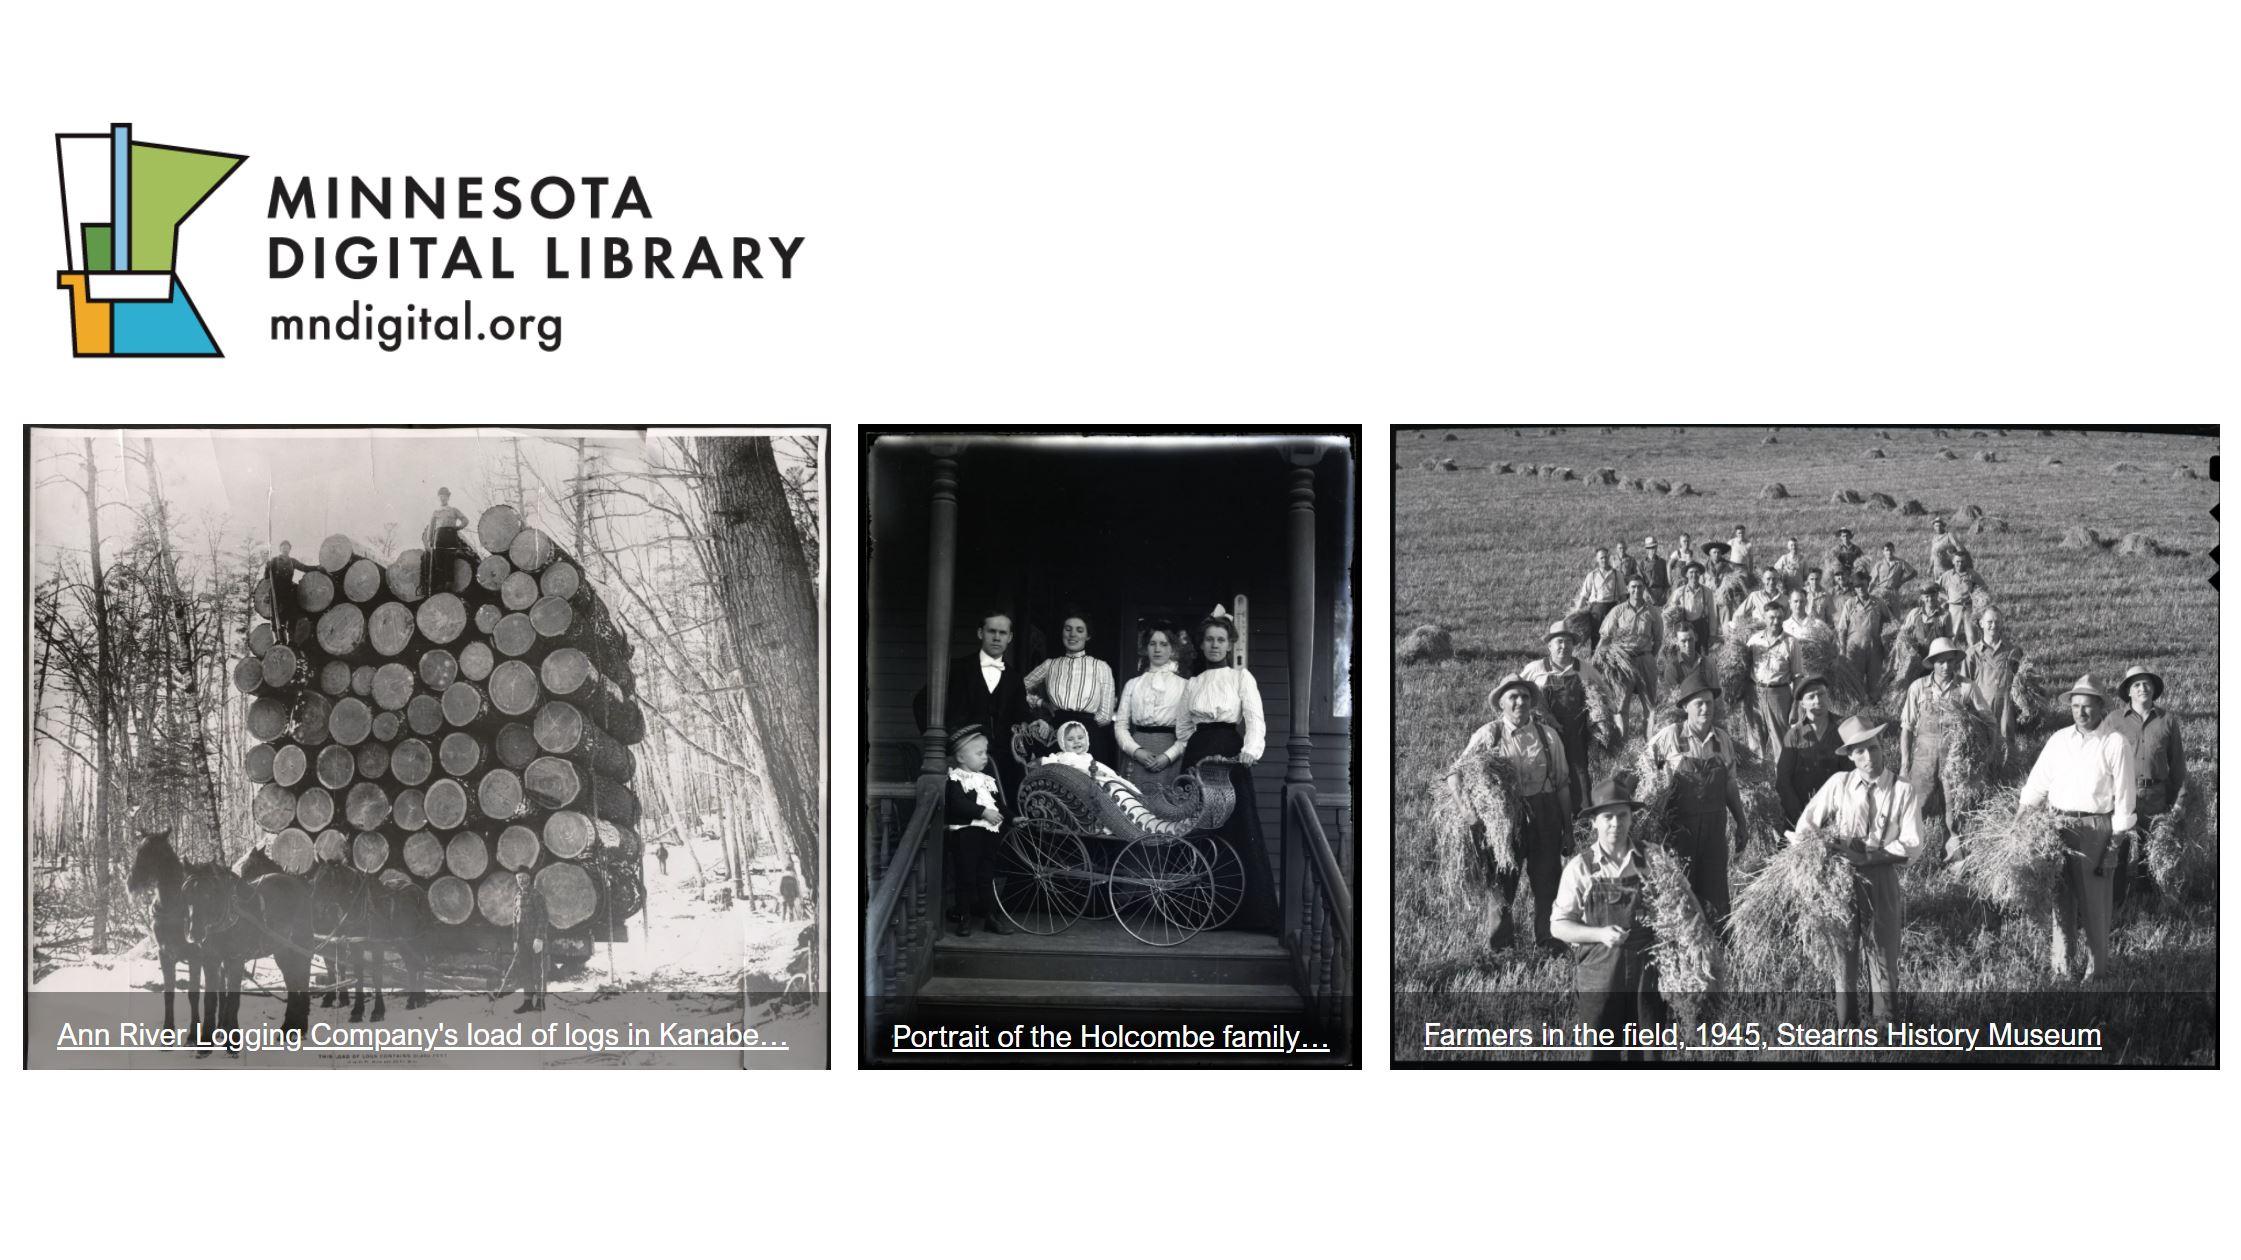 Three black-and-white photos arranged horizontally beneath the Minnesota Digital Library logo and wordmark.